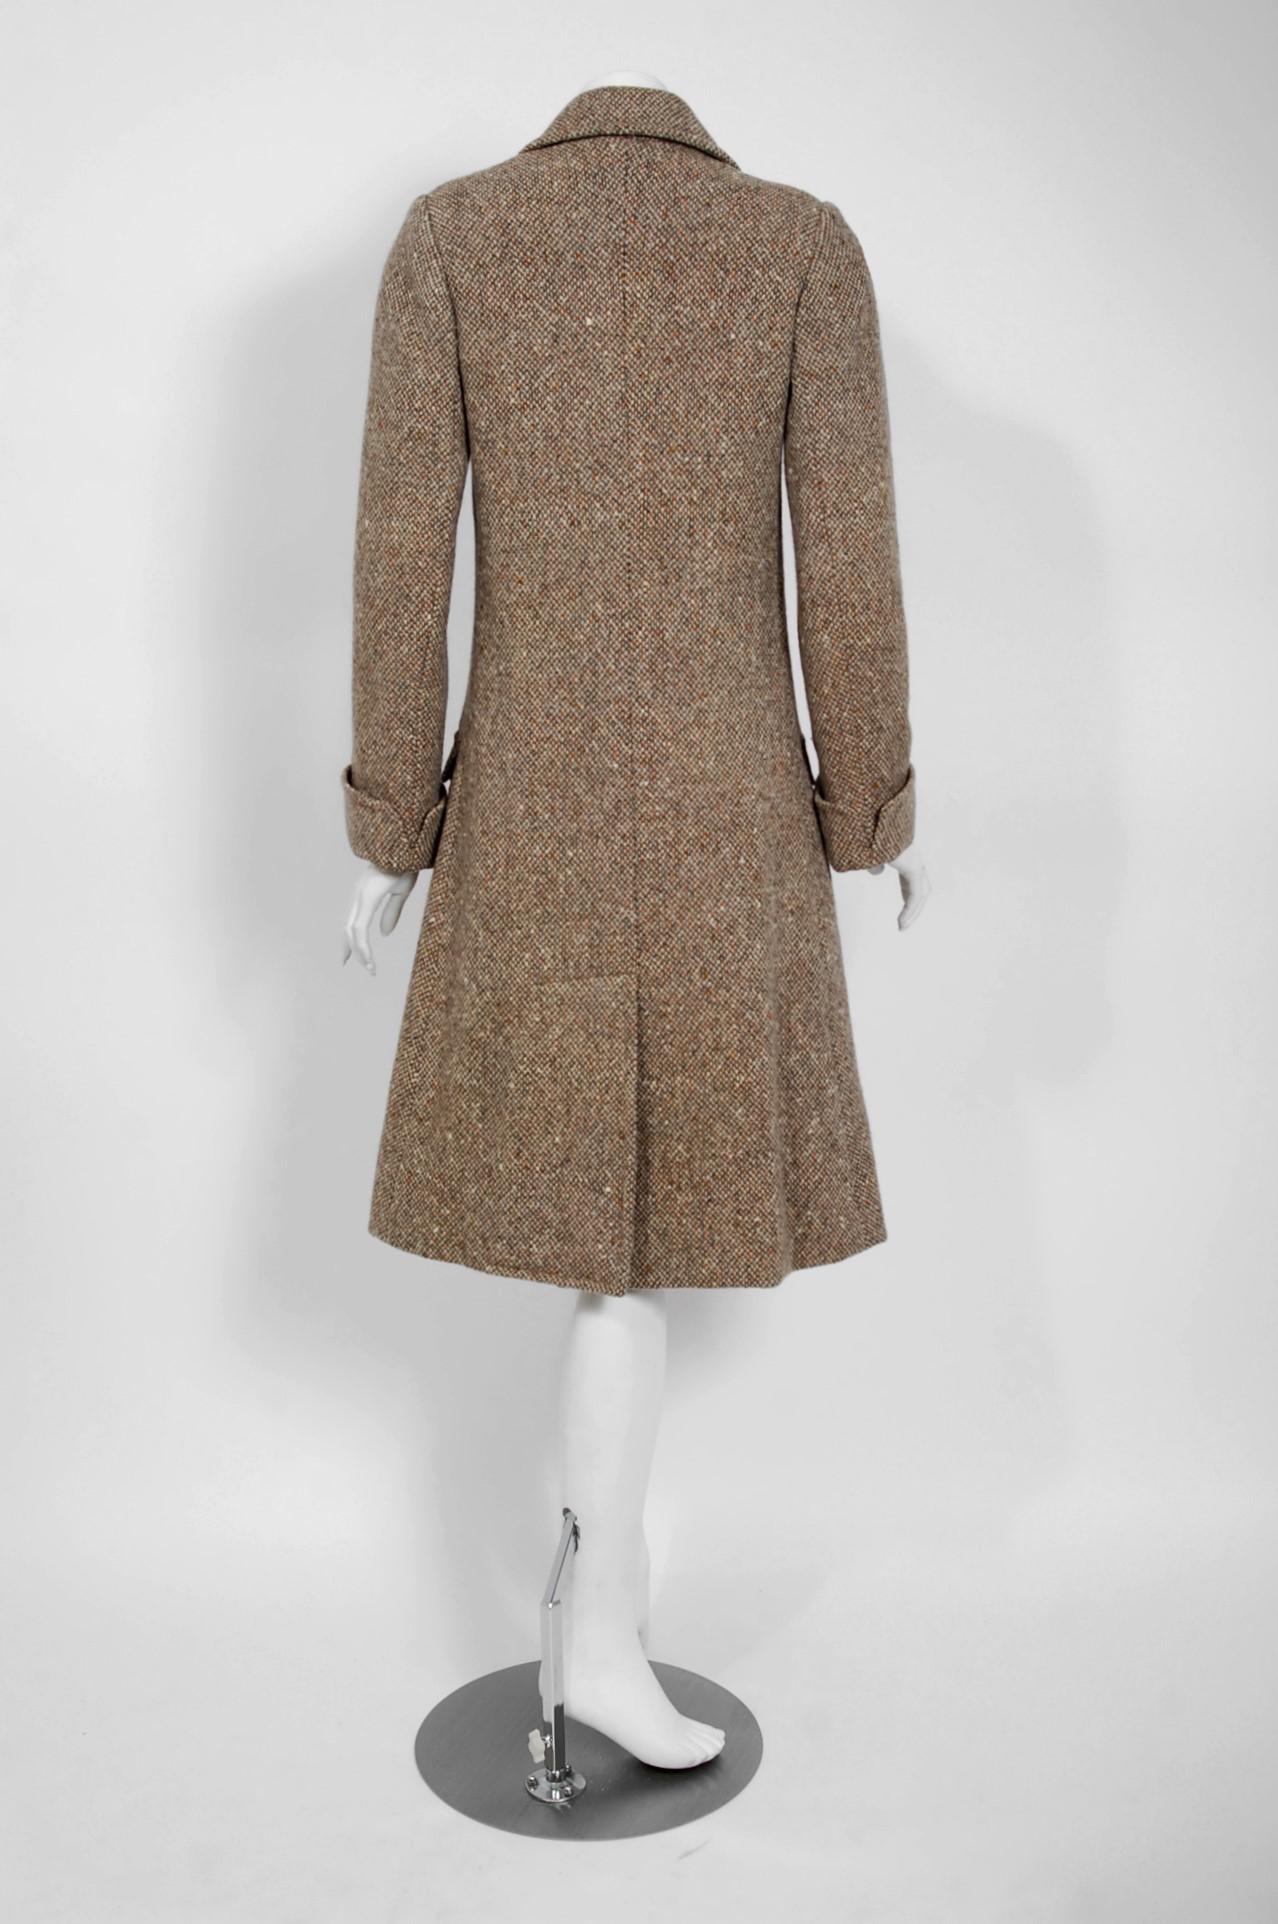 1973 Yves Saint Laurent Rive Gauche Autumn Brown Tweed Wide-Pocket Tailored Coat 3